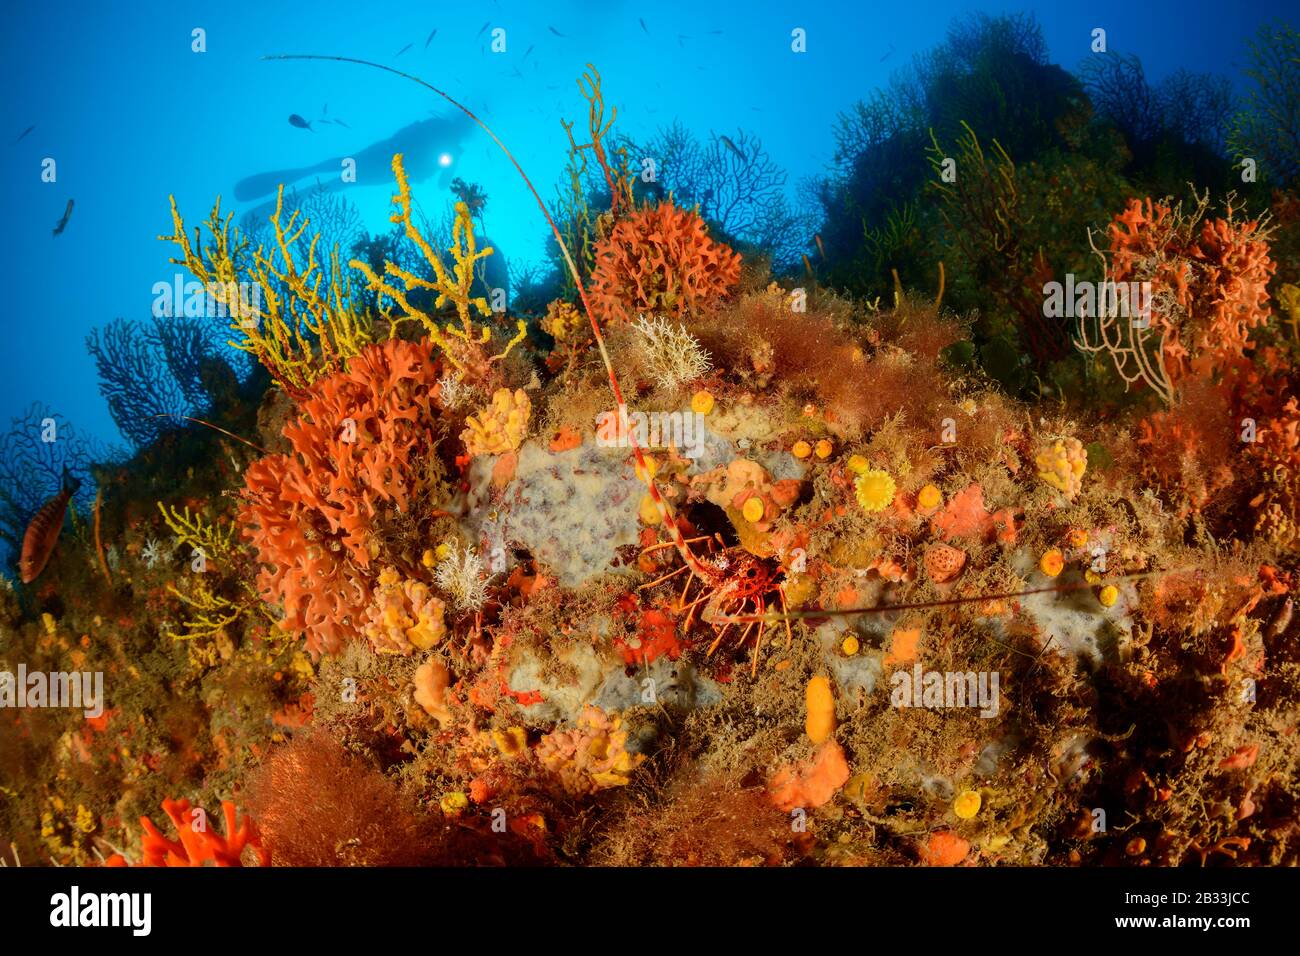 European spiny lobster, Palinurus elephas, in colourful mediterranean coral reef, and scuba diver, Tamariu, Costa Brava, Spain, Mediterranean Sea, MR Stock Photo